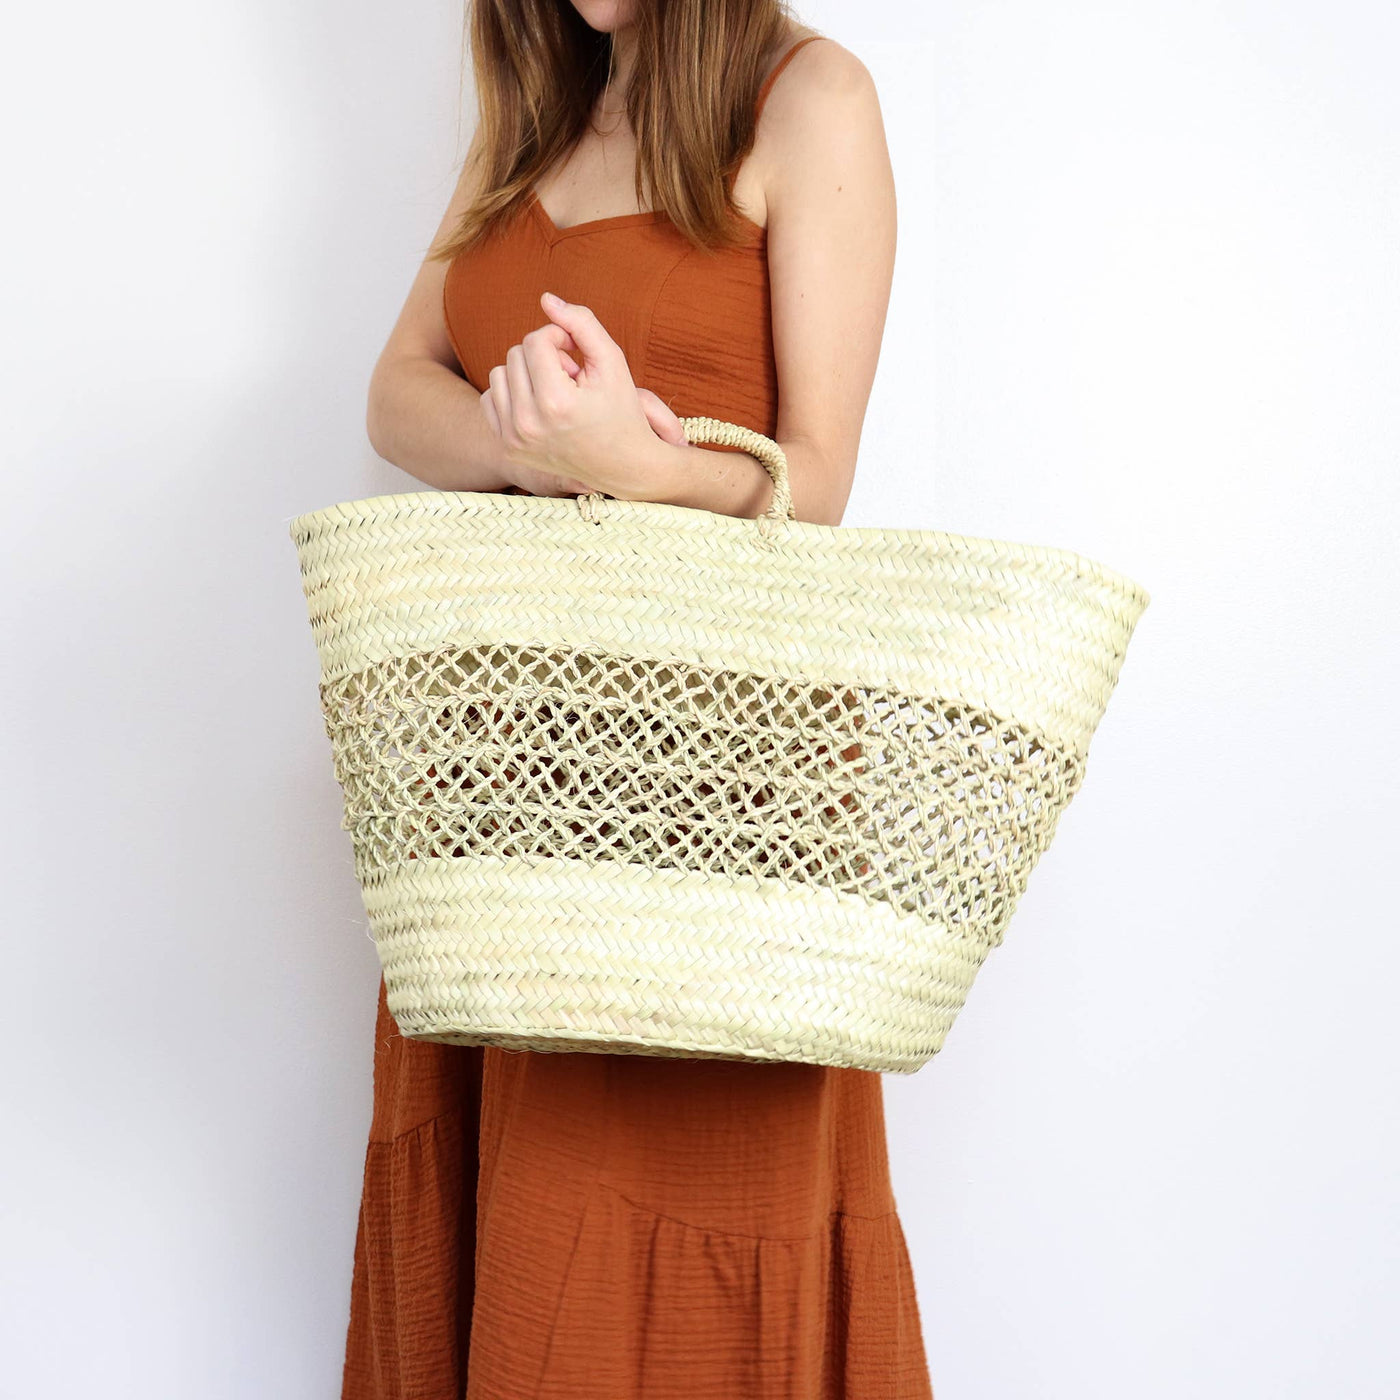 SOCCO Designs Lagos French Basket - Straw Beach Tote - Simple Good